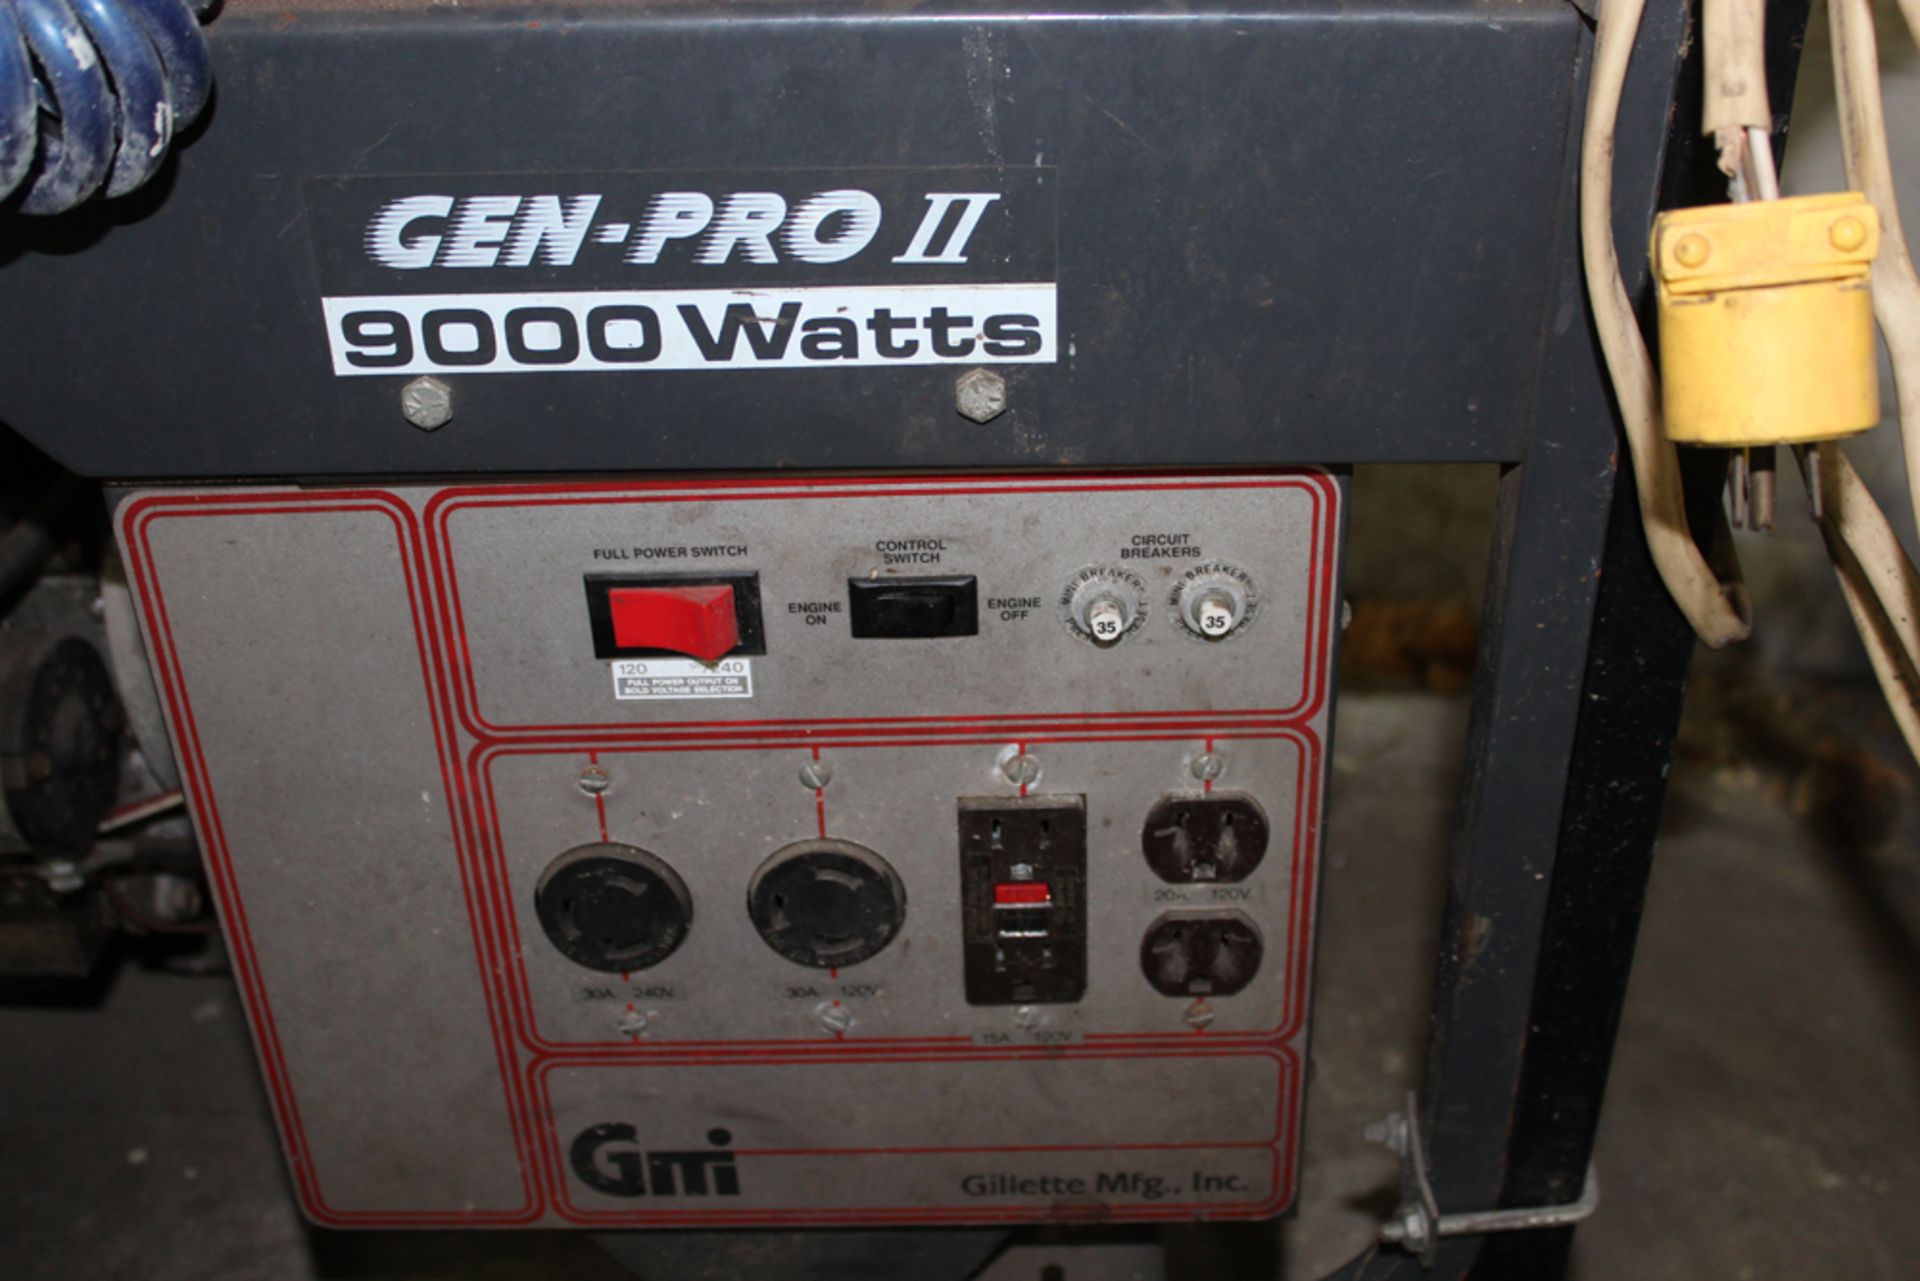 GEN-PRO II 9000 WATT GENERATOR - Image 2 of 2